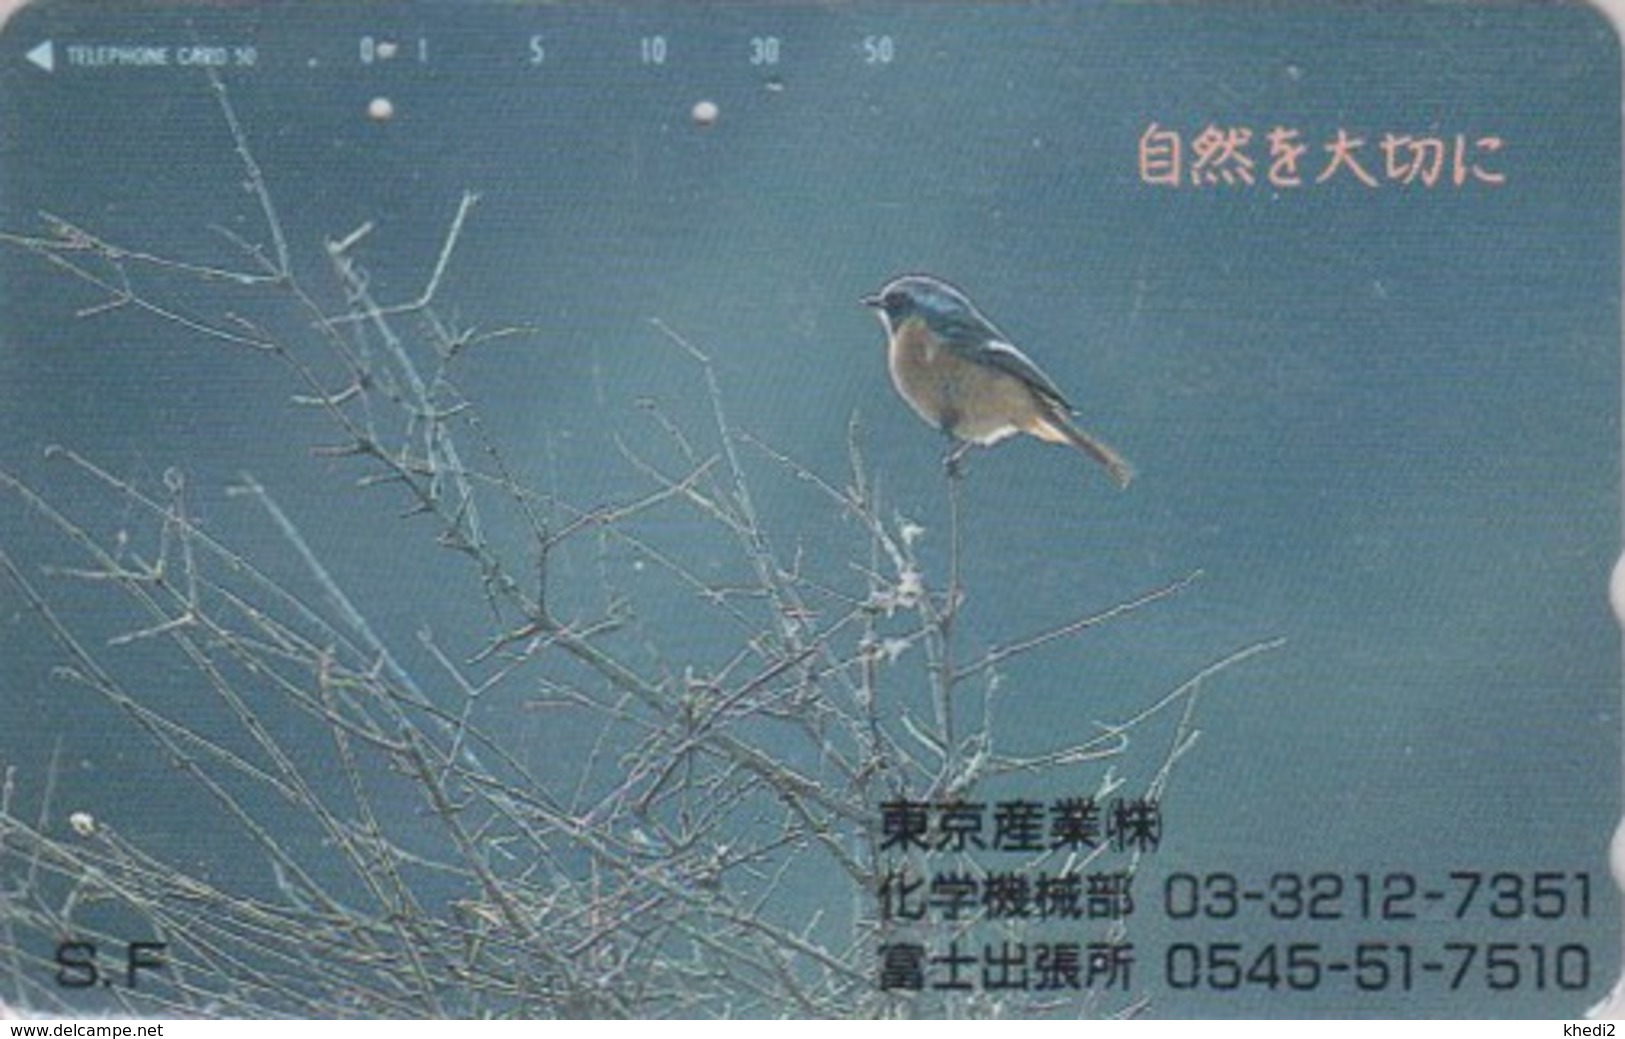 Télécarte Japon / 110-140904 - Animal - OISEAU Passereau - GOBEMOUCHE - FLYCATCHER BIRD Japan Phonecard - 4456 - Sperlingsvögel & Singvögel